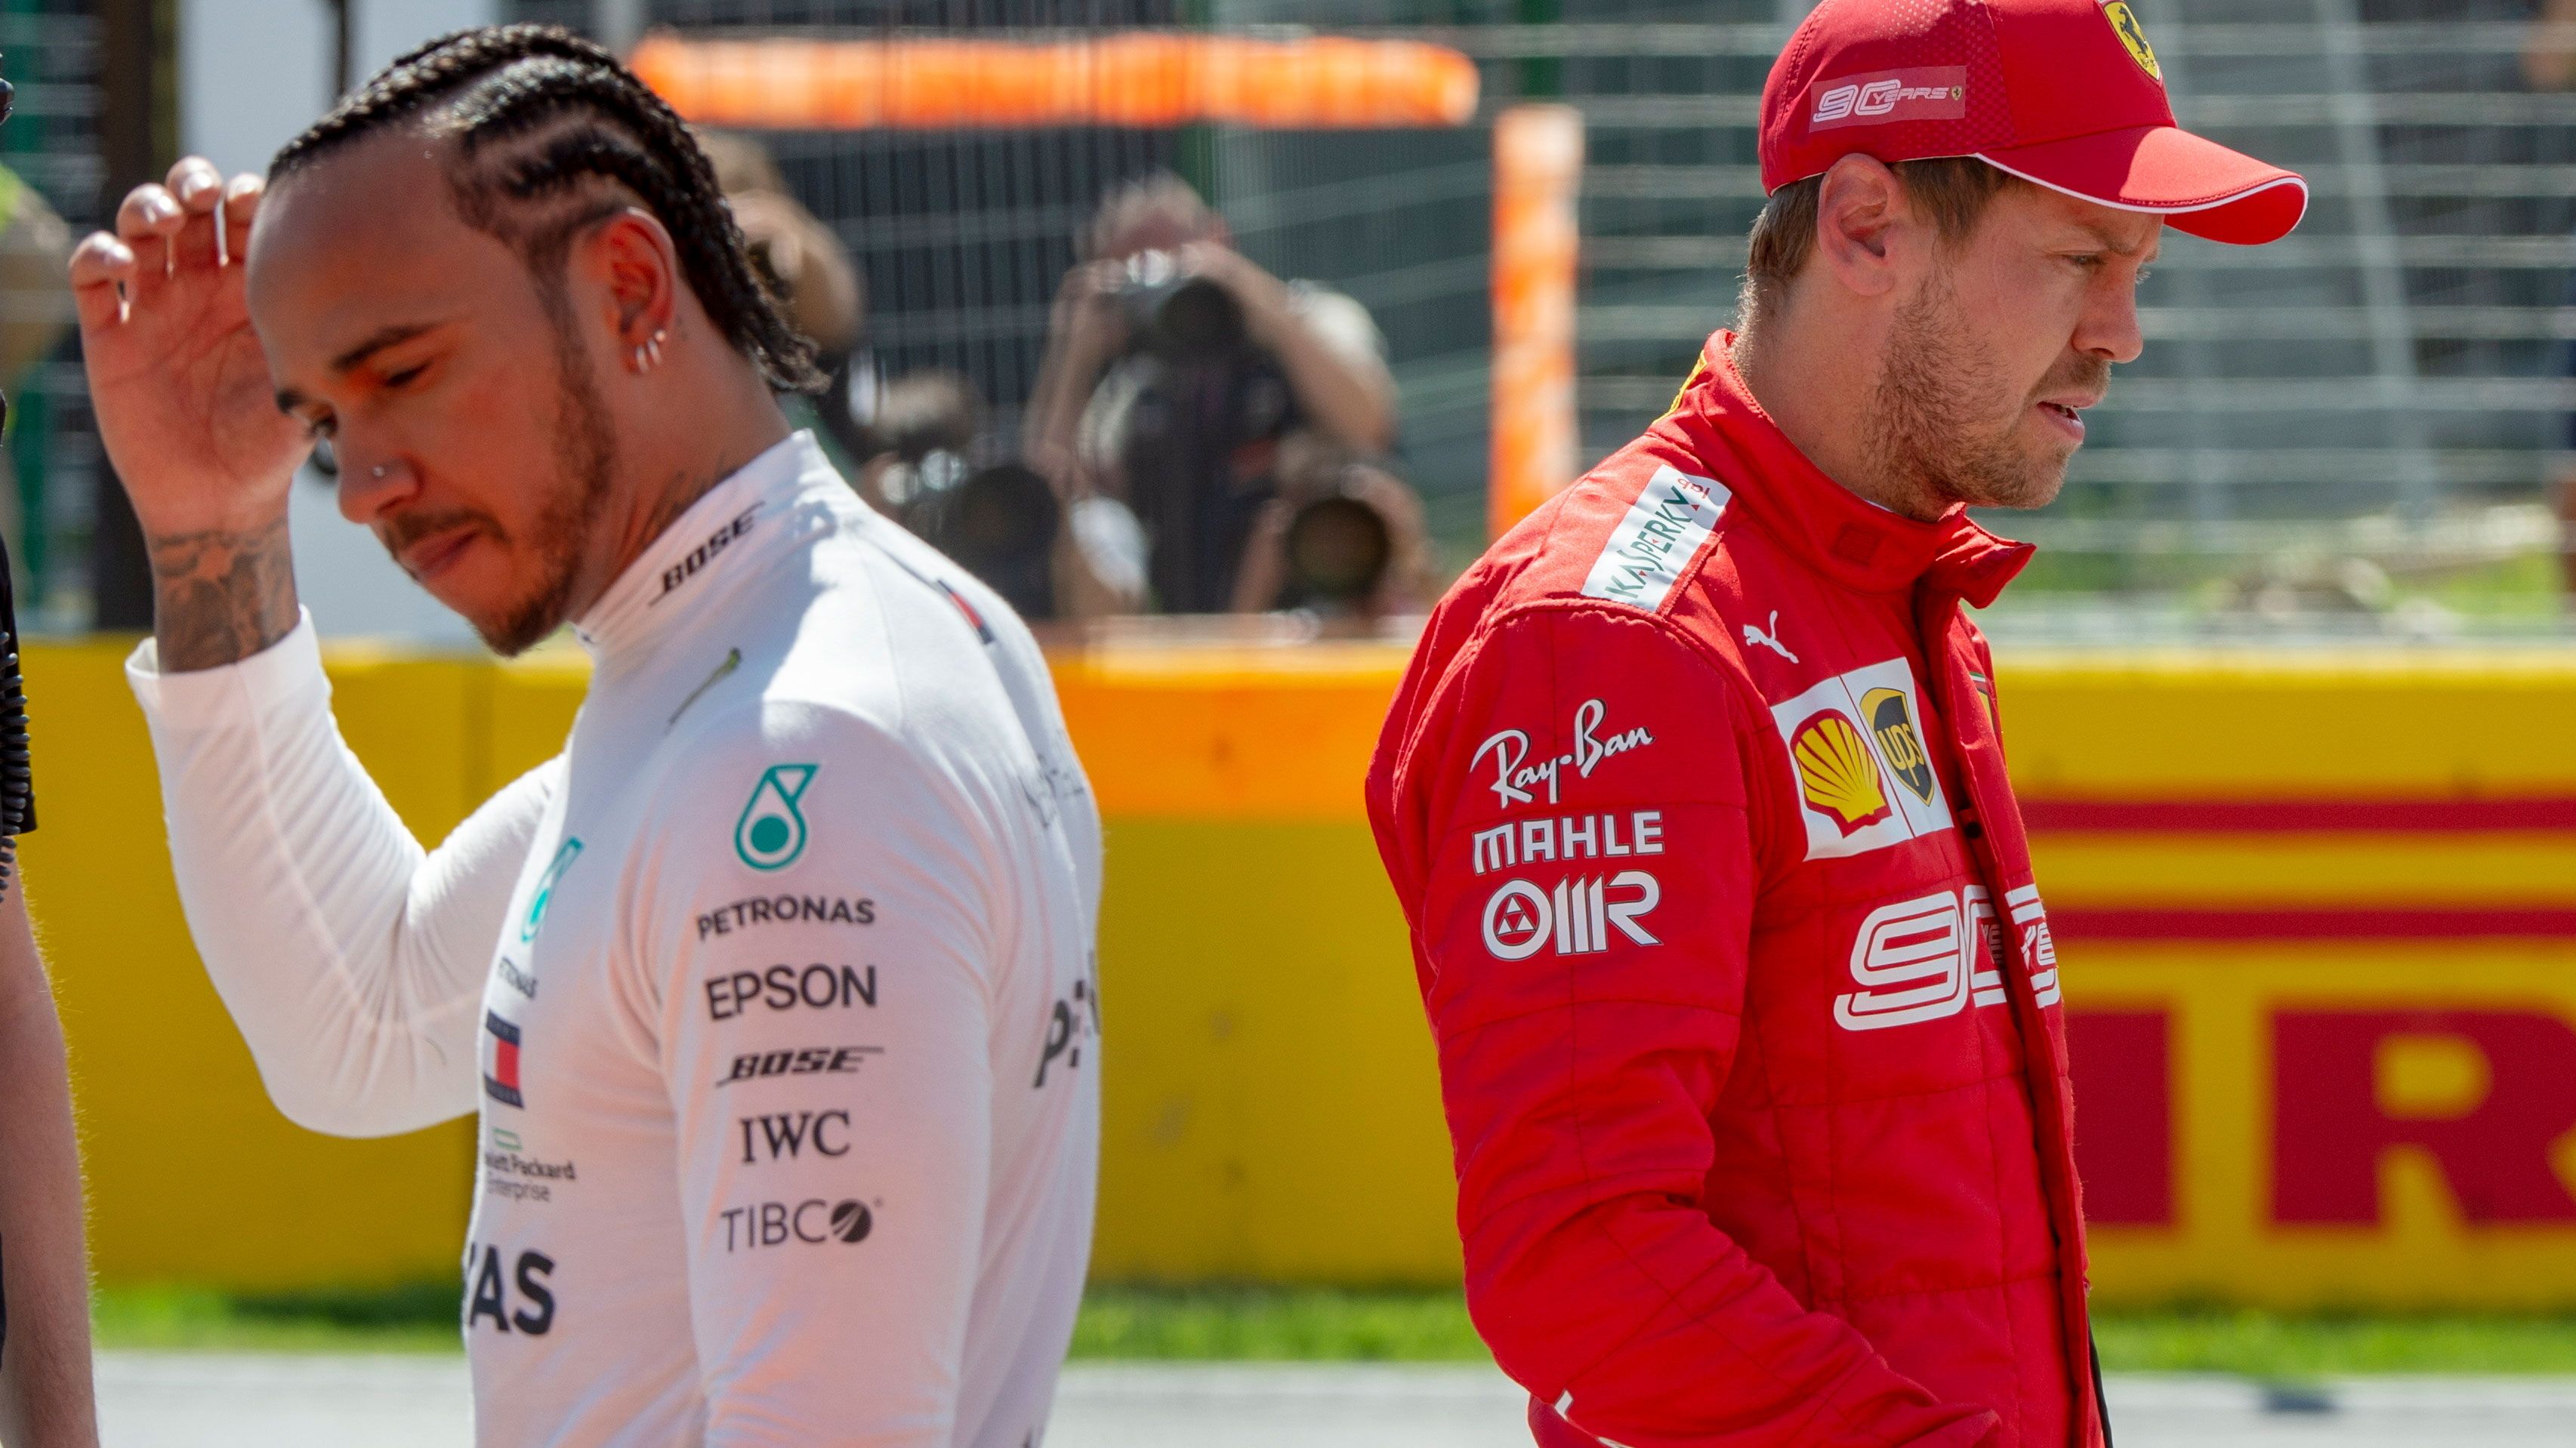 Ferrari request review of Canadian GP after Sebastian Vettel penalty